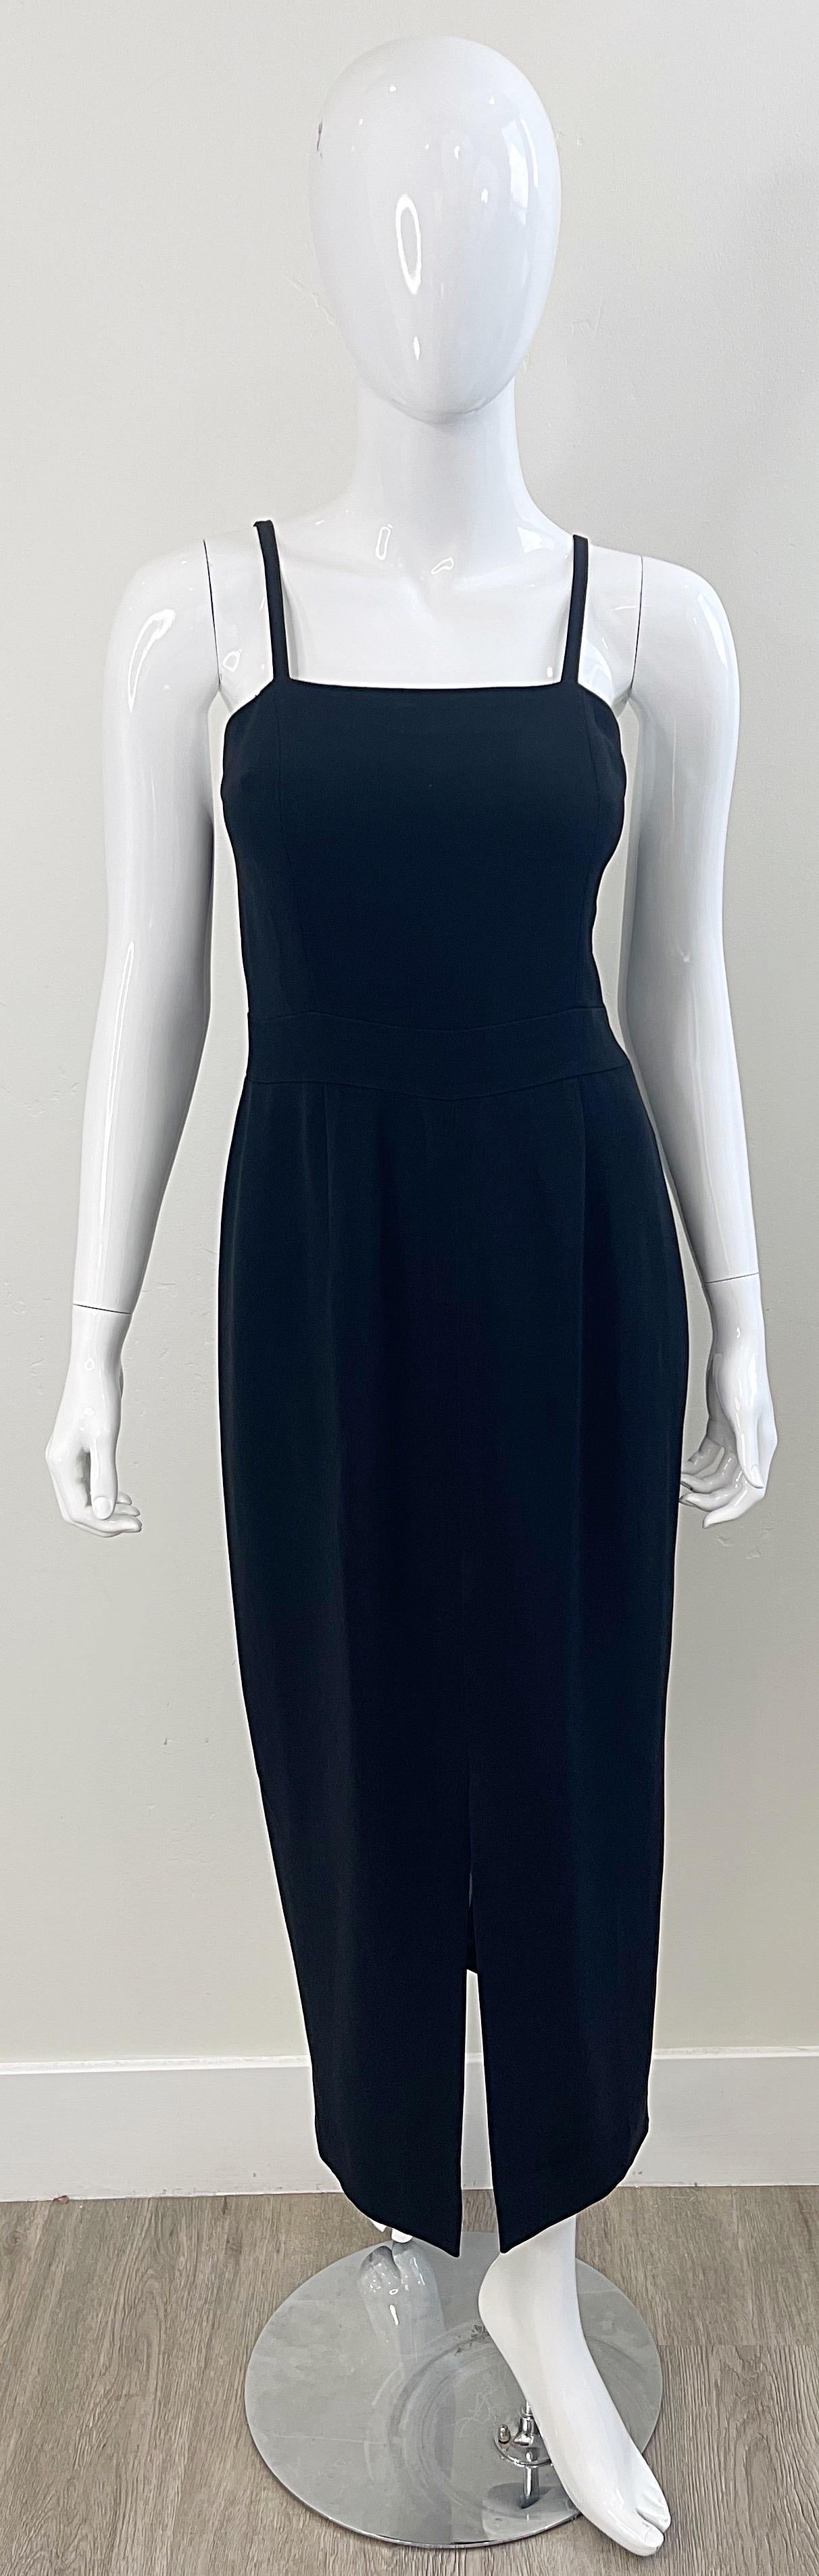 Karl Lagerfeld 1990s Black Sleeveless Timeless Black Vintage 90s Gown Maxi Dress For Sale 10